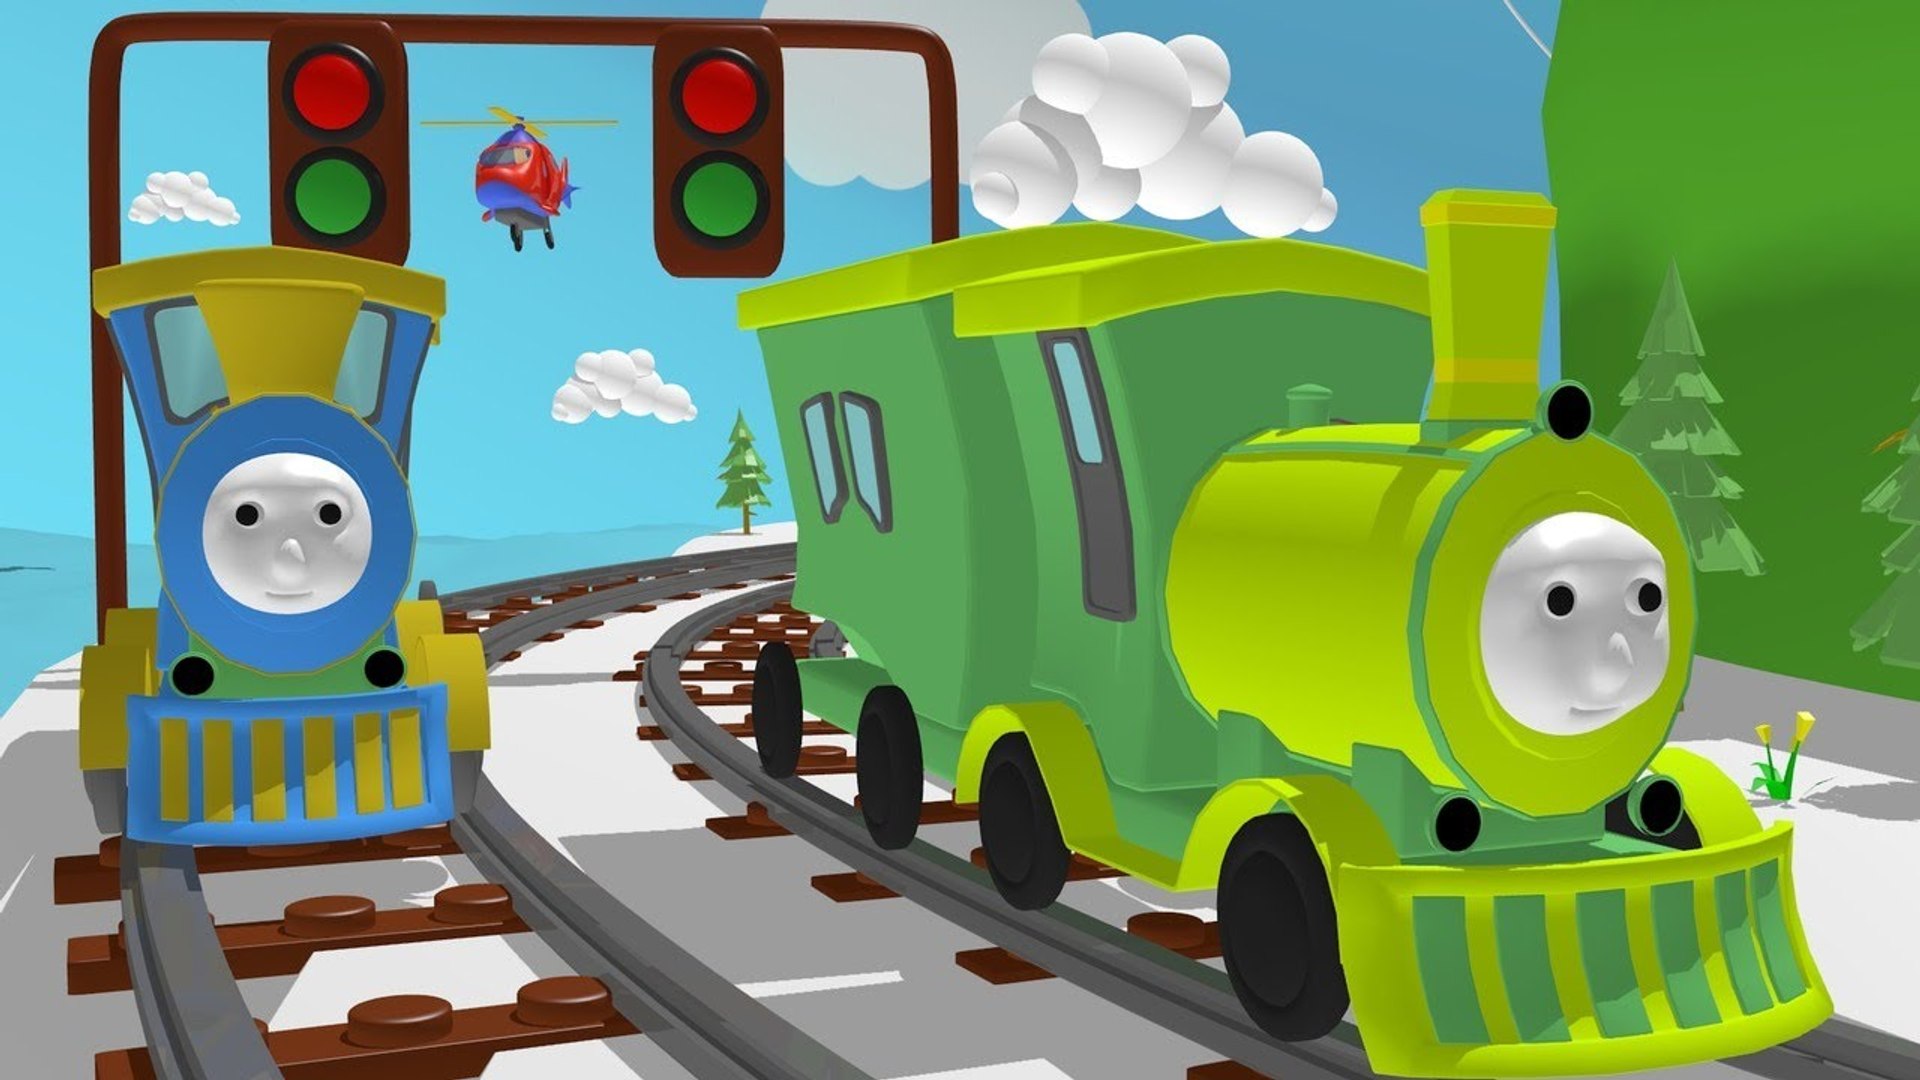 Thomas Train - Friend Bob the Train - Choo Choo train - Cars for kids -  Cartoon Cartoon Toy Train - video Dailymotion